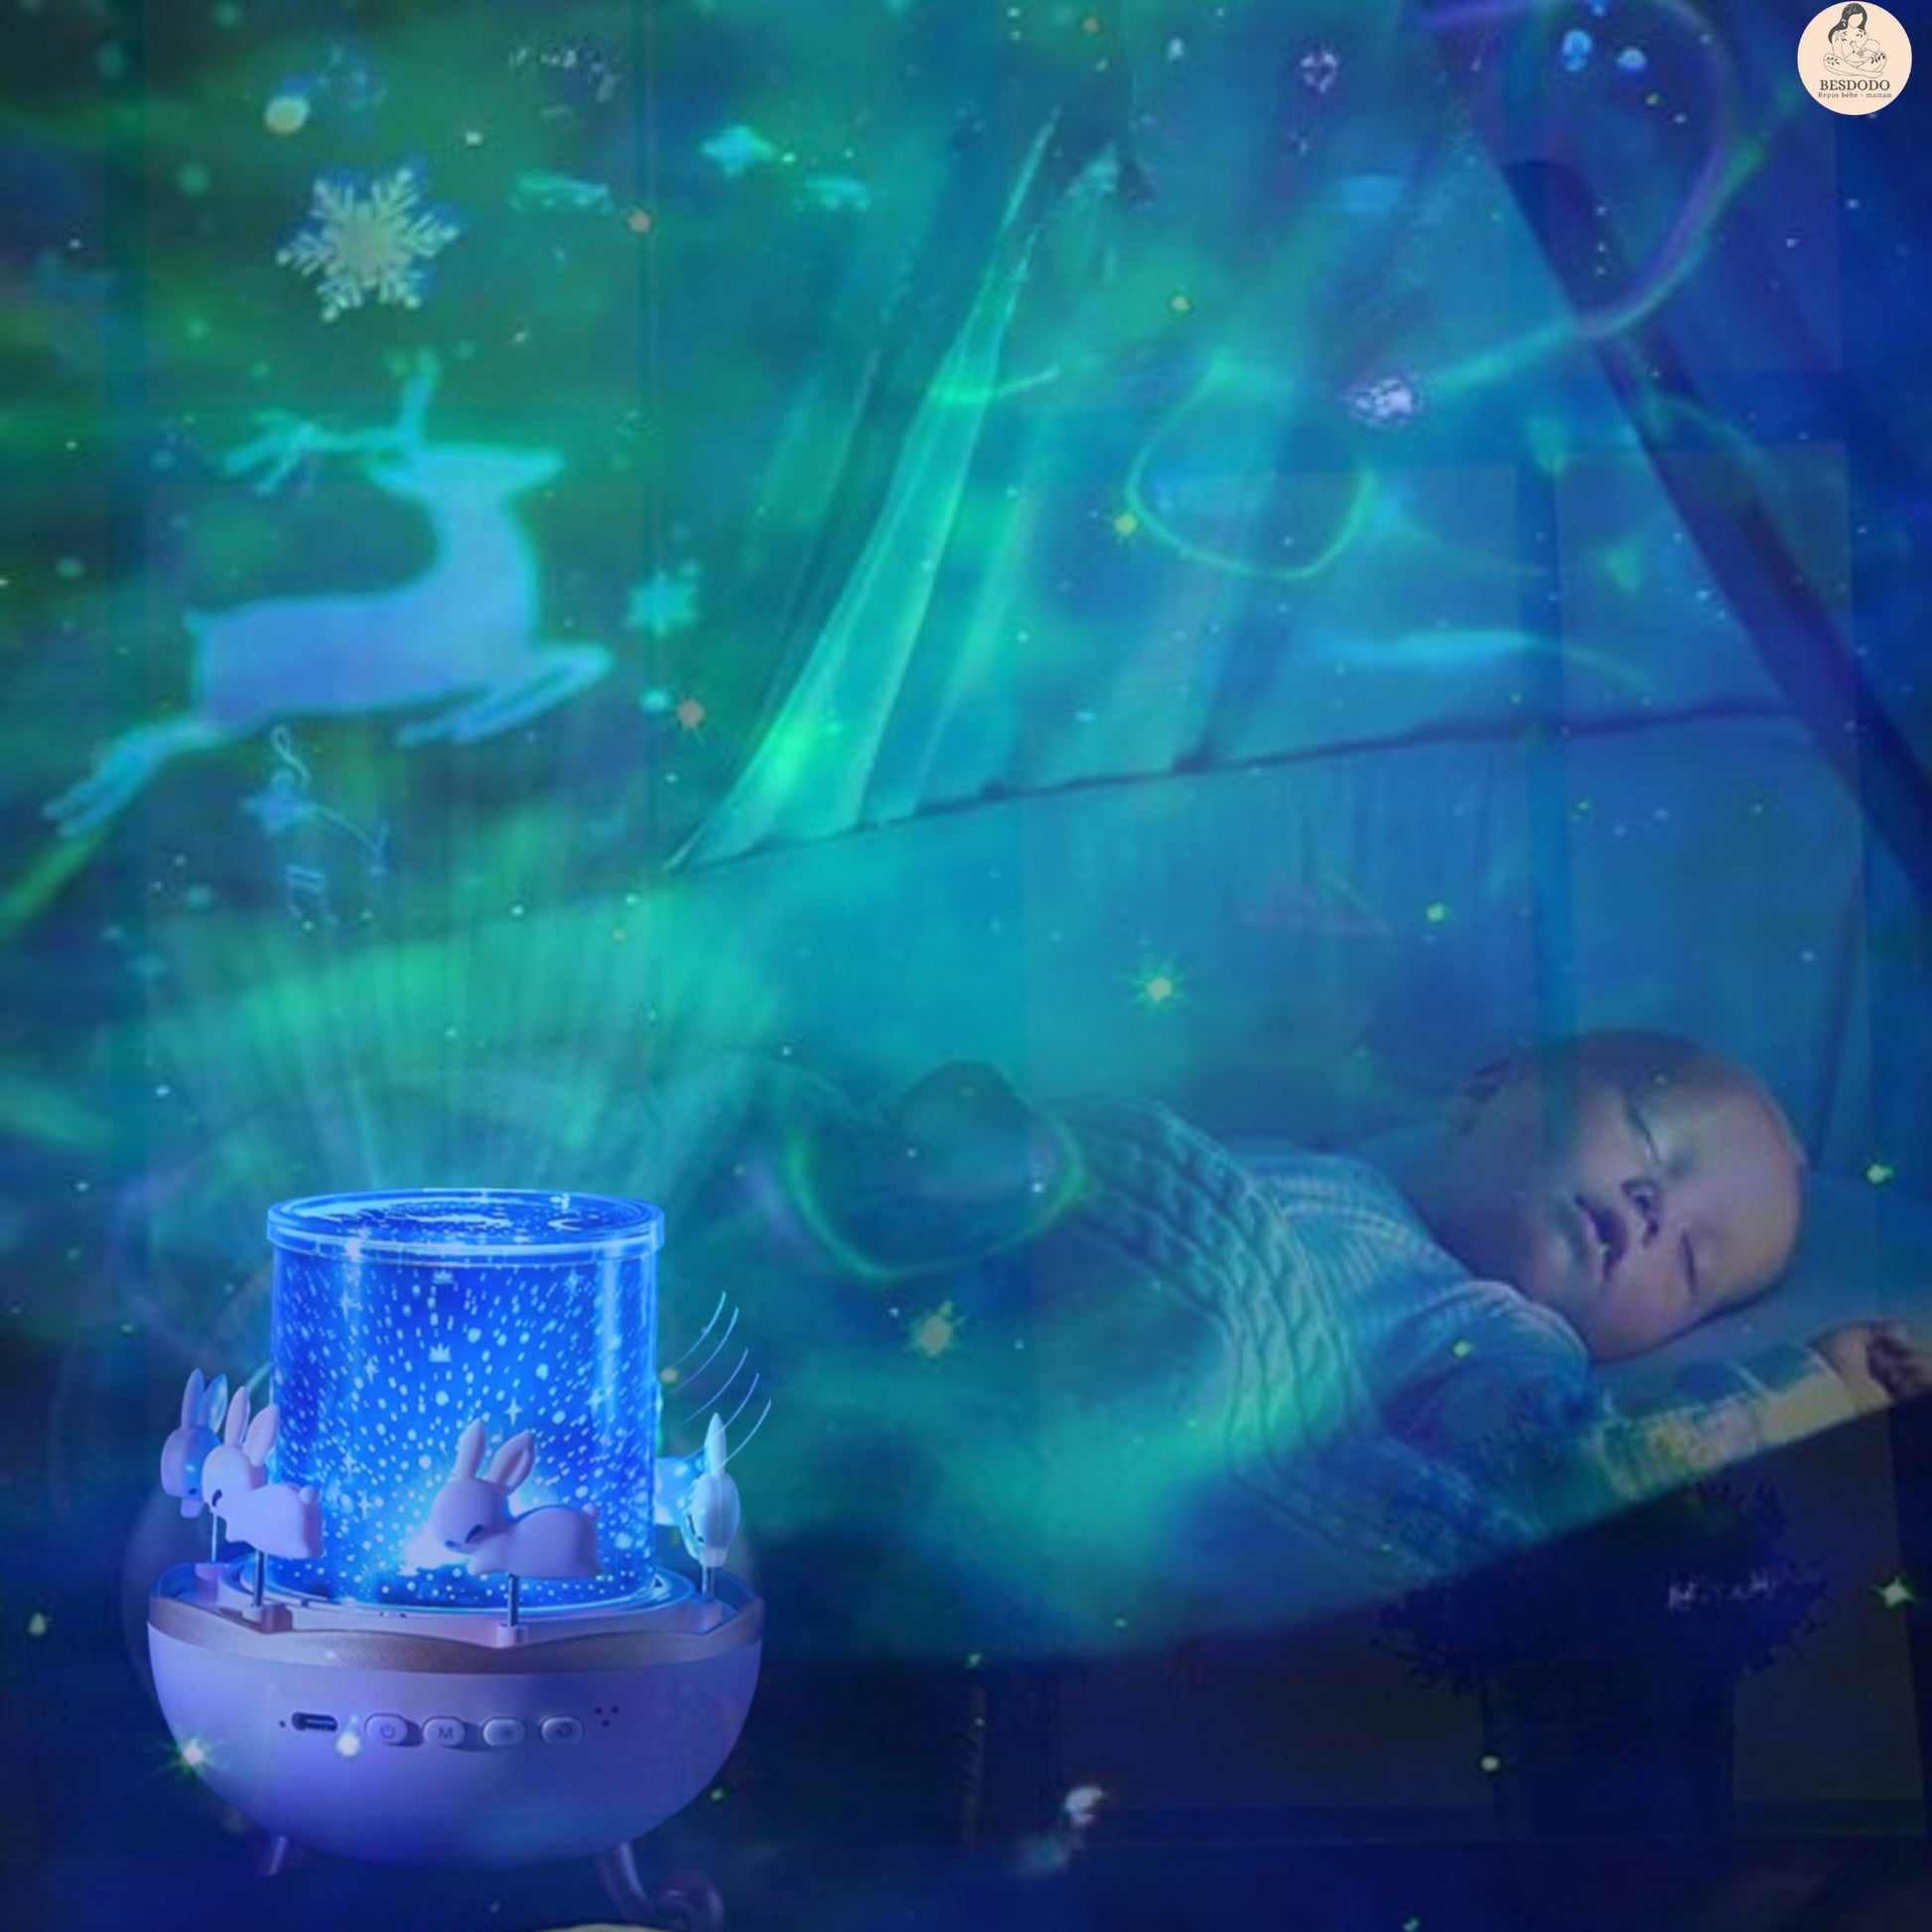 Veilleuse bébé, veilleuses de nuit avec projection au plafond : adbb